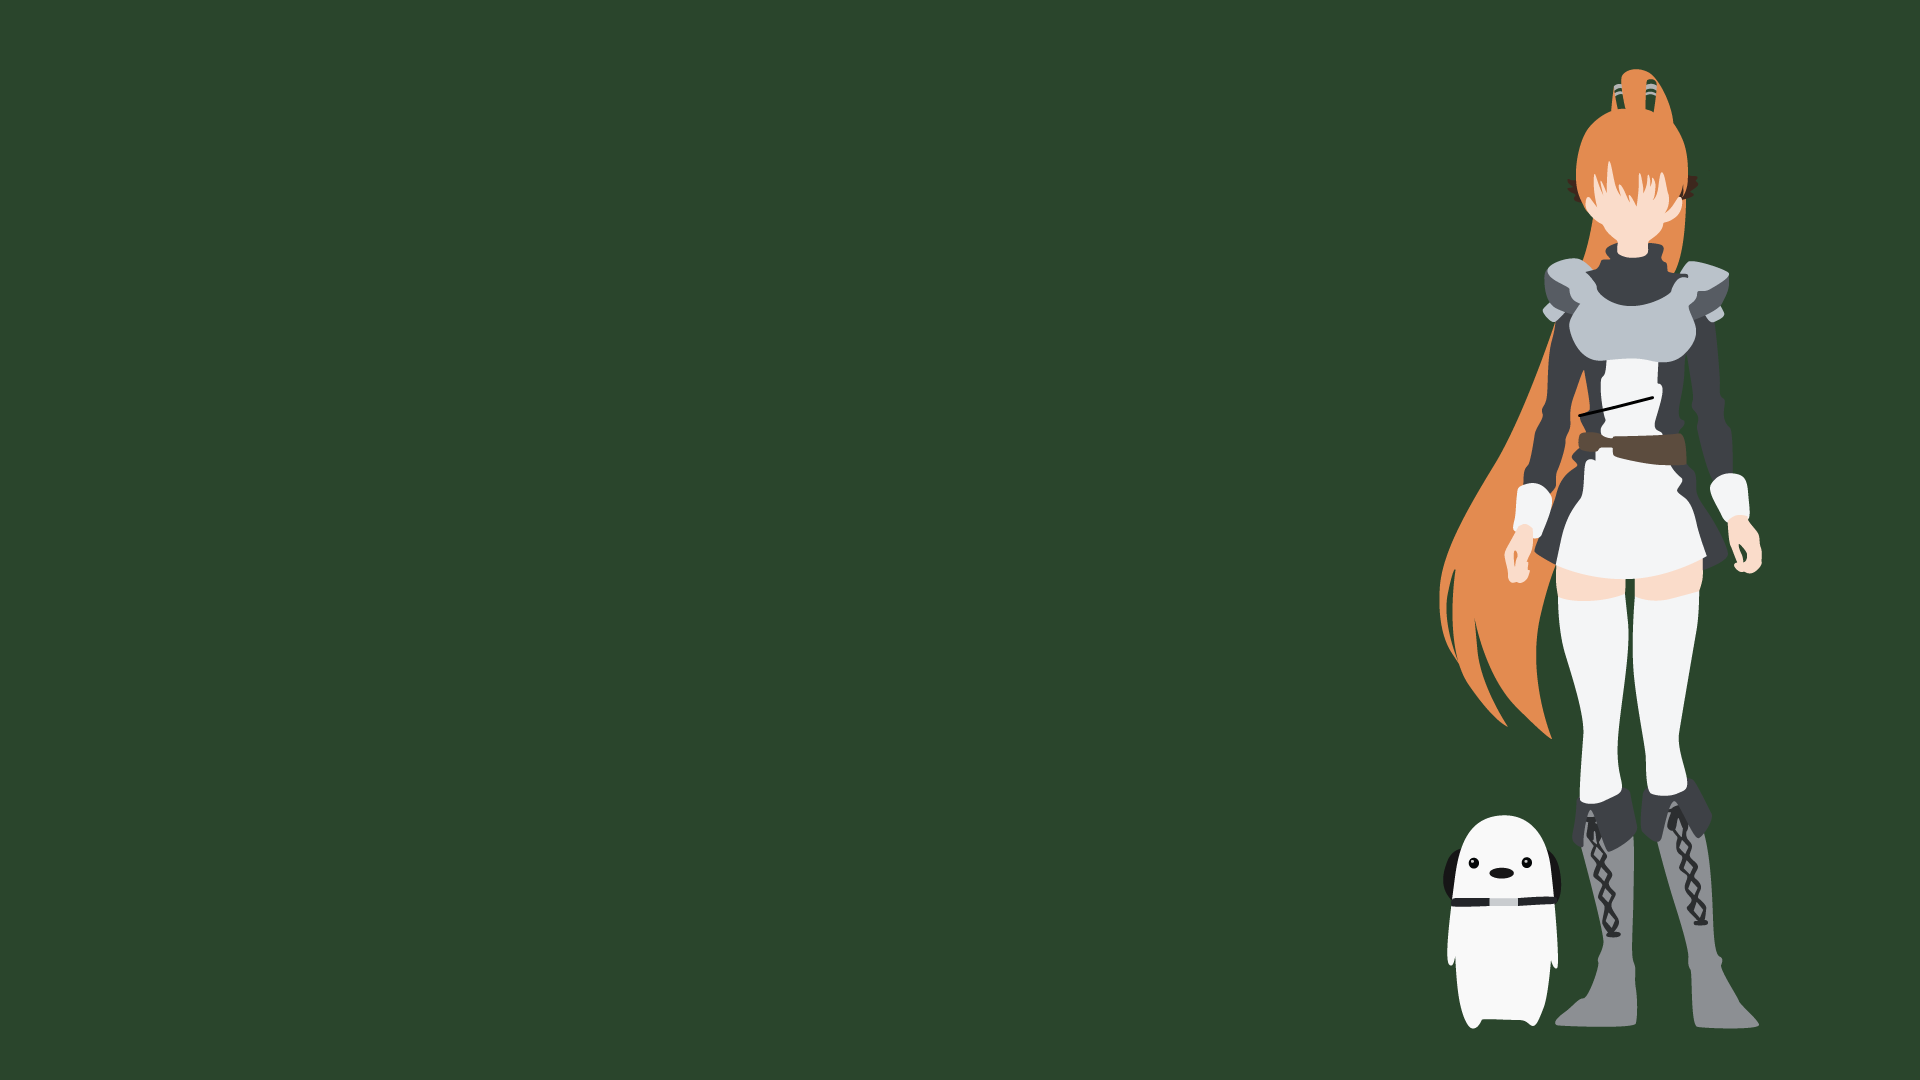 Anime 1920x1080 Akame ga Kill! anime girls minimalism green background simple background dog long hair anime skirt